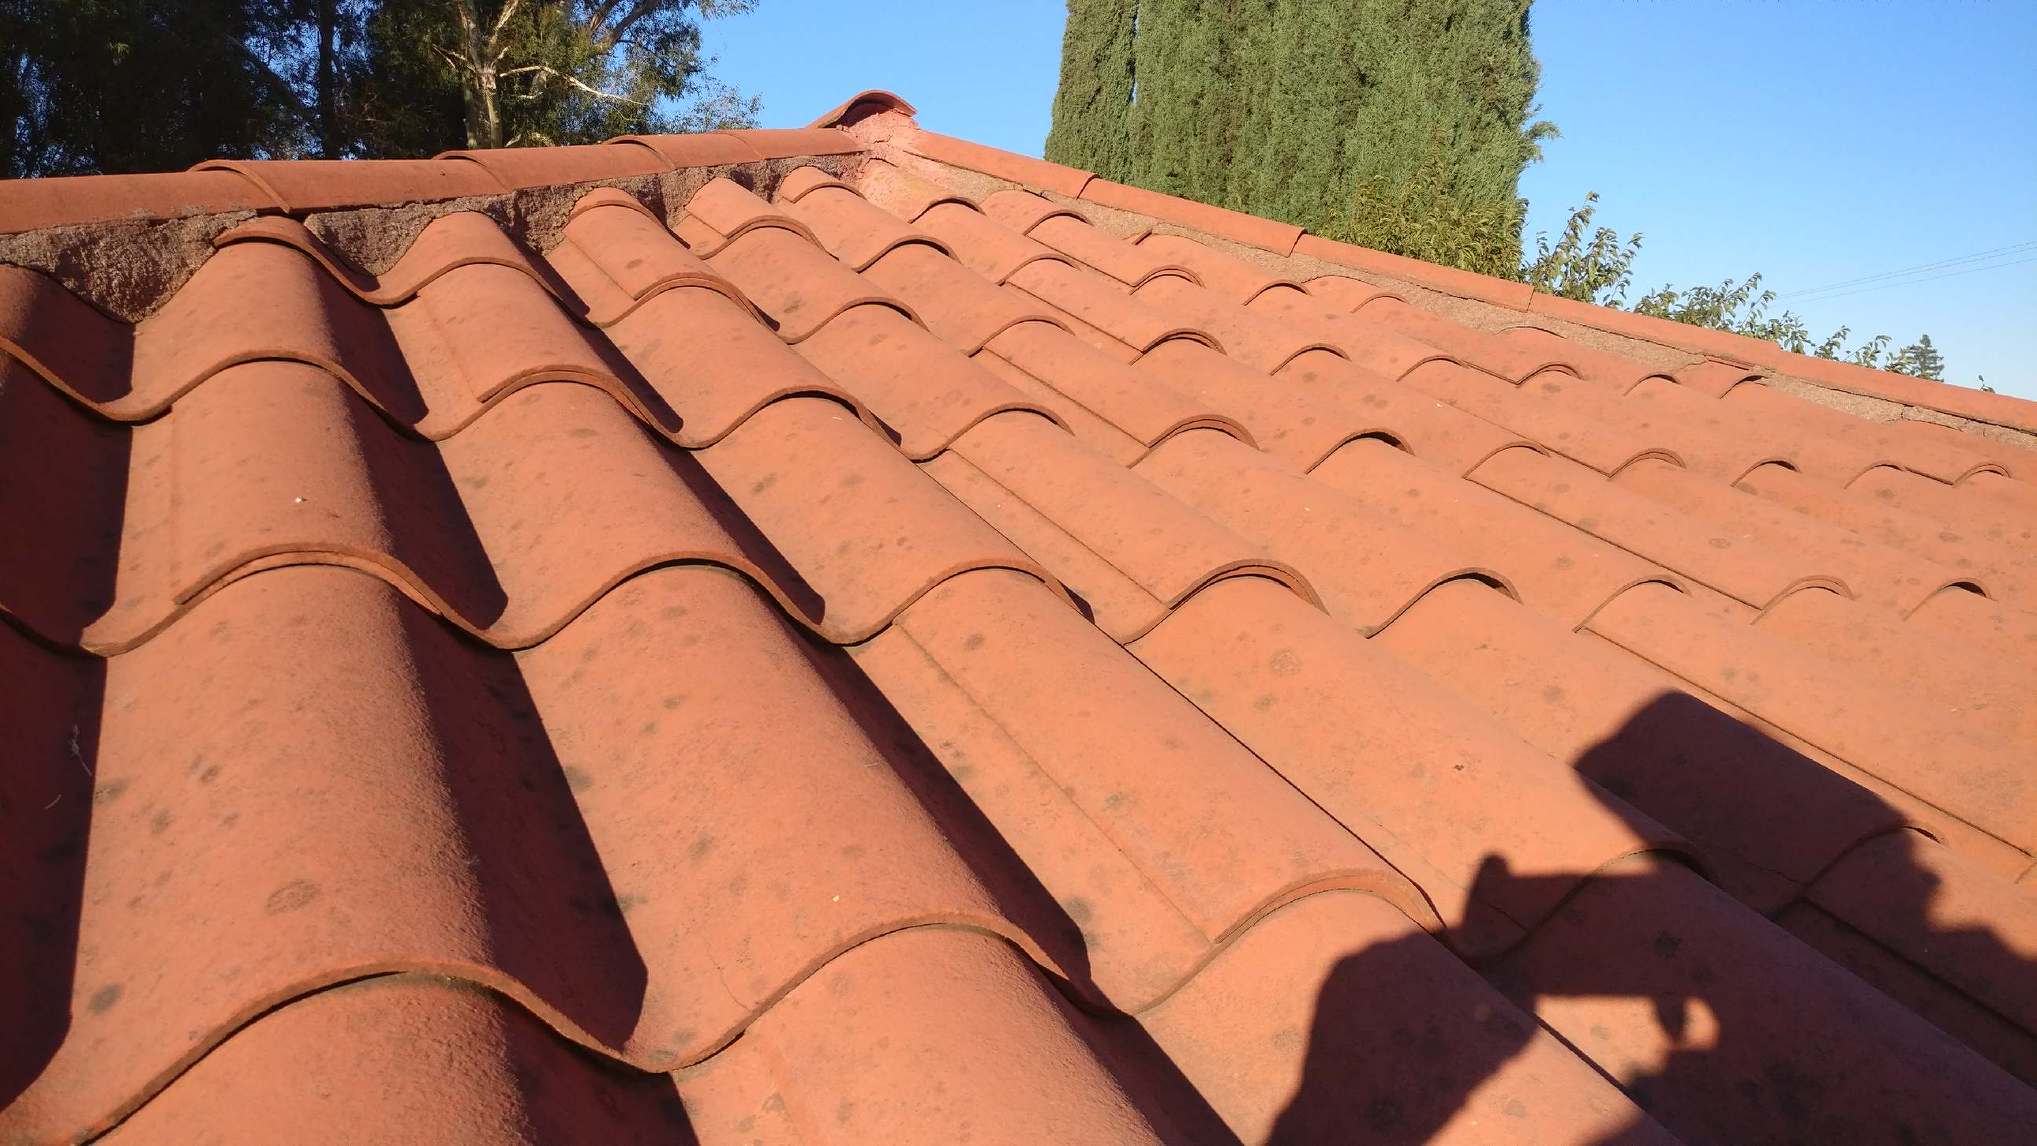 A tile roof